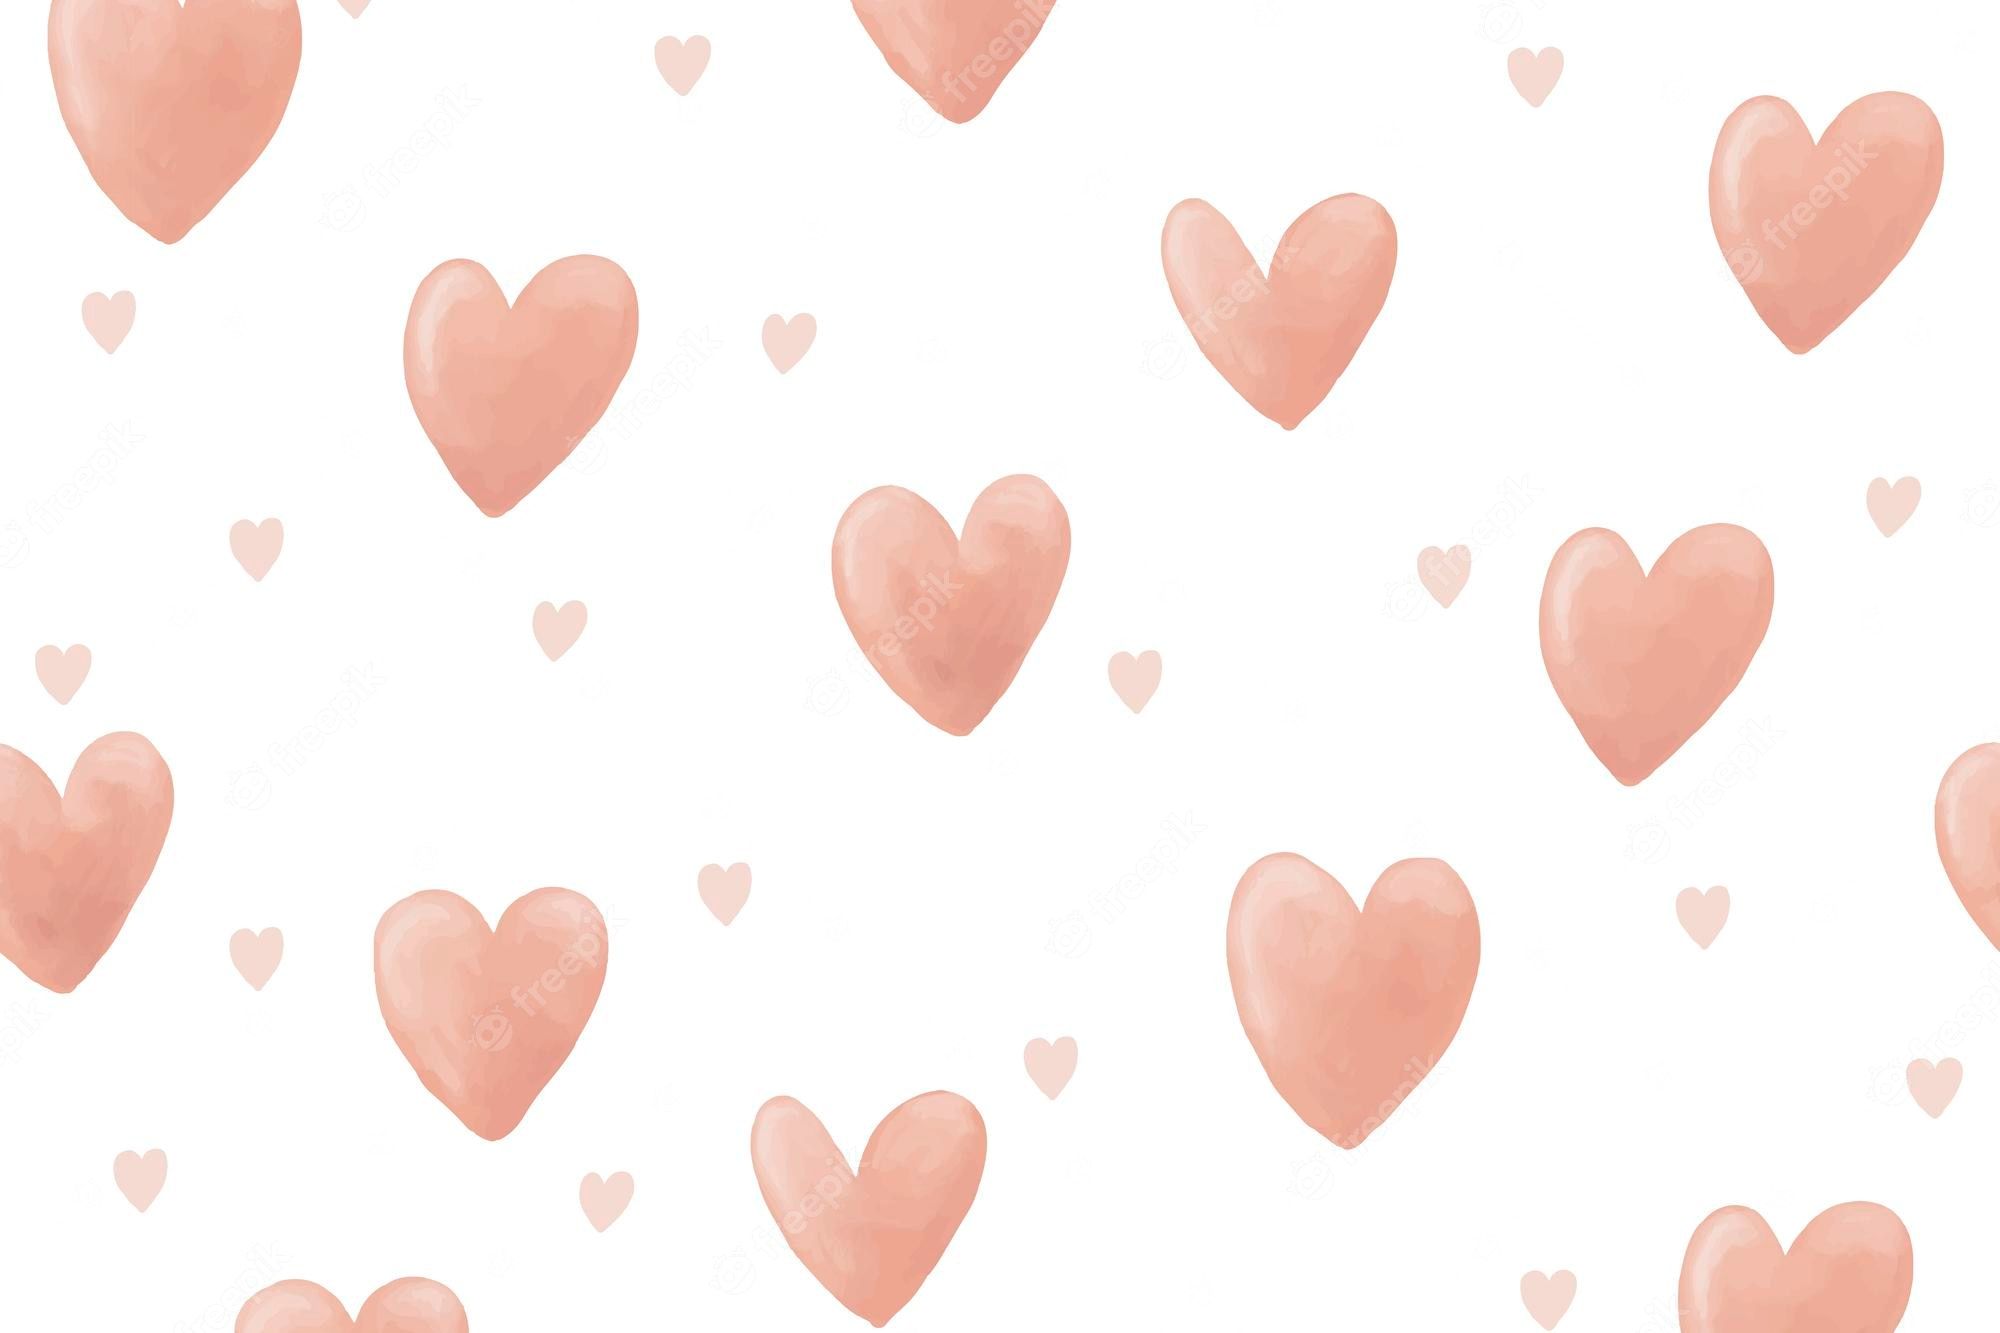 Free Vector. Heart background desktop wallpaper, cute watercolor vector